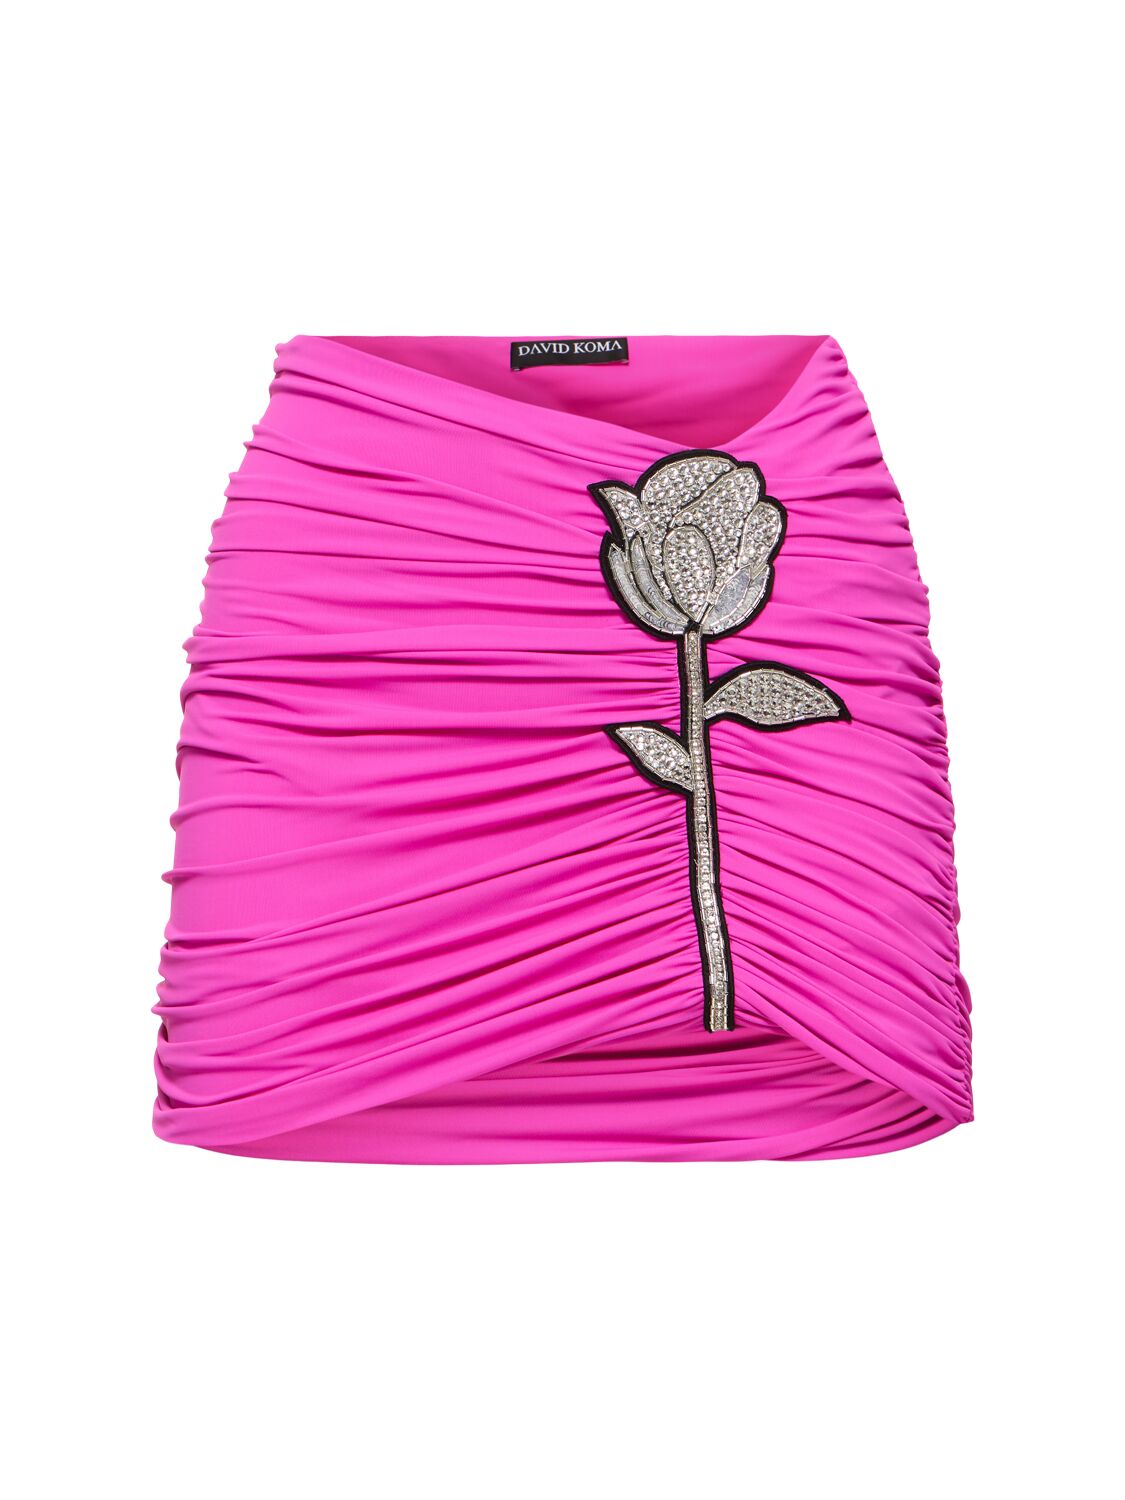 David Koma Ruched Mini Skirt W/ Rose In Fuchsia,silver